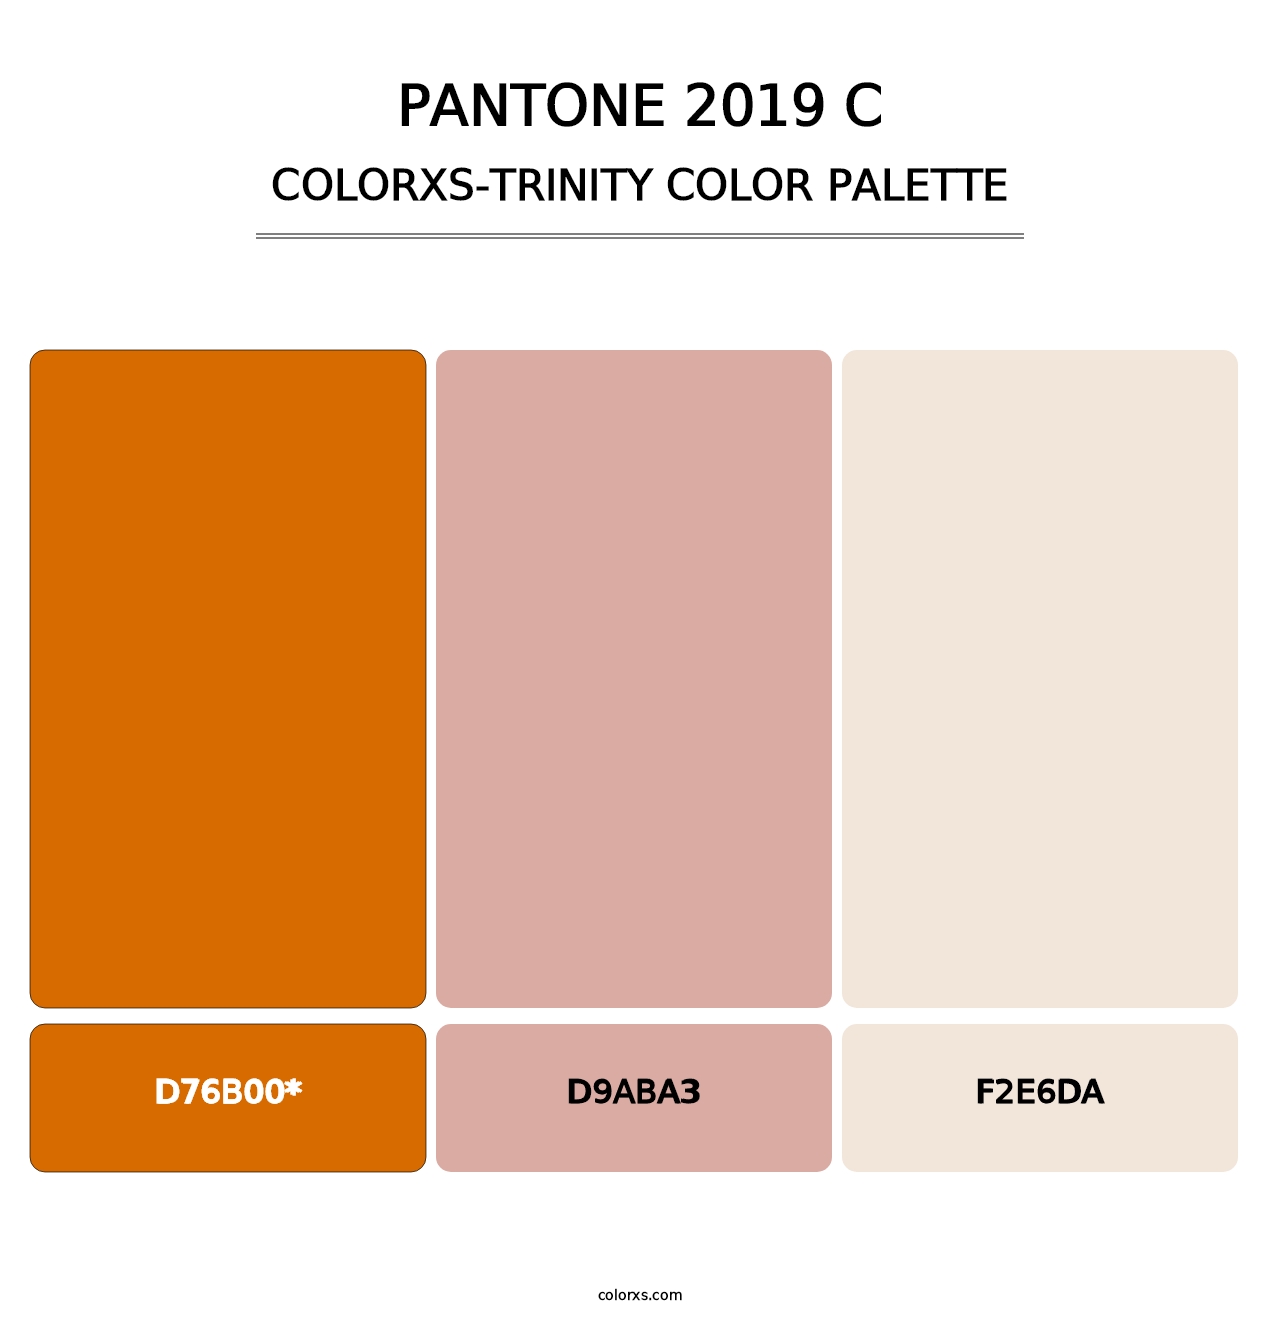 PANTONE 2019 C - Colorxs Trinity Palette